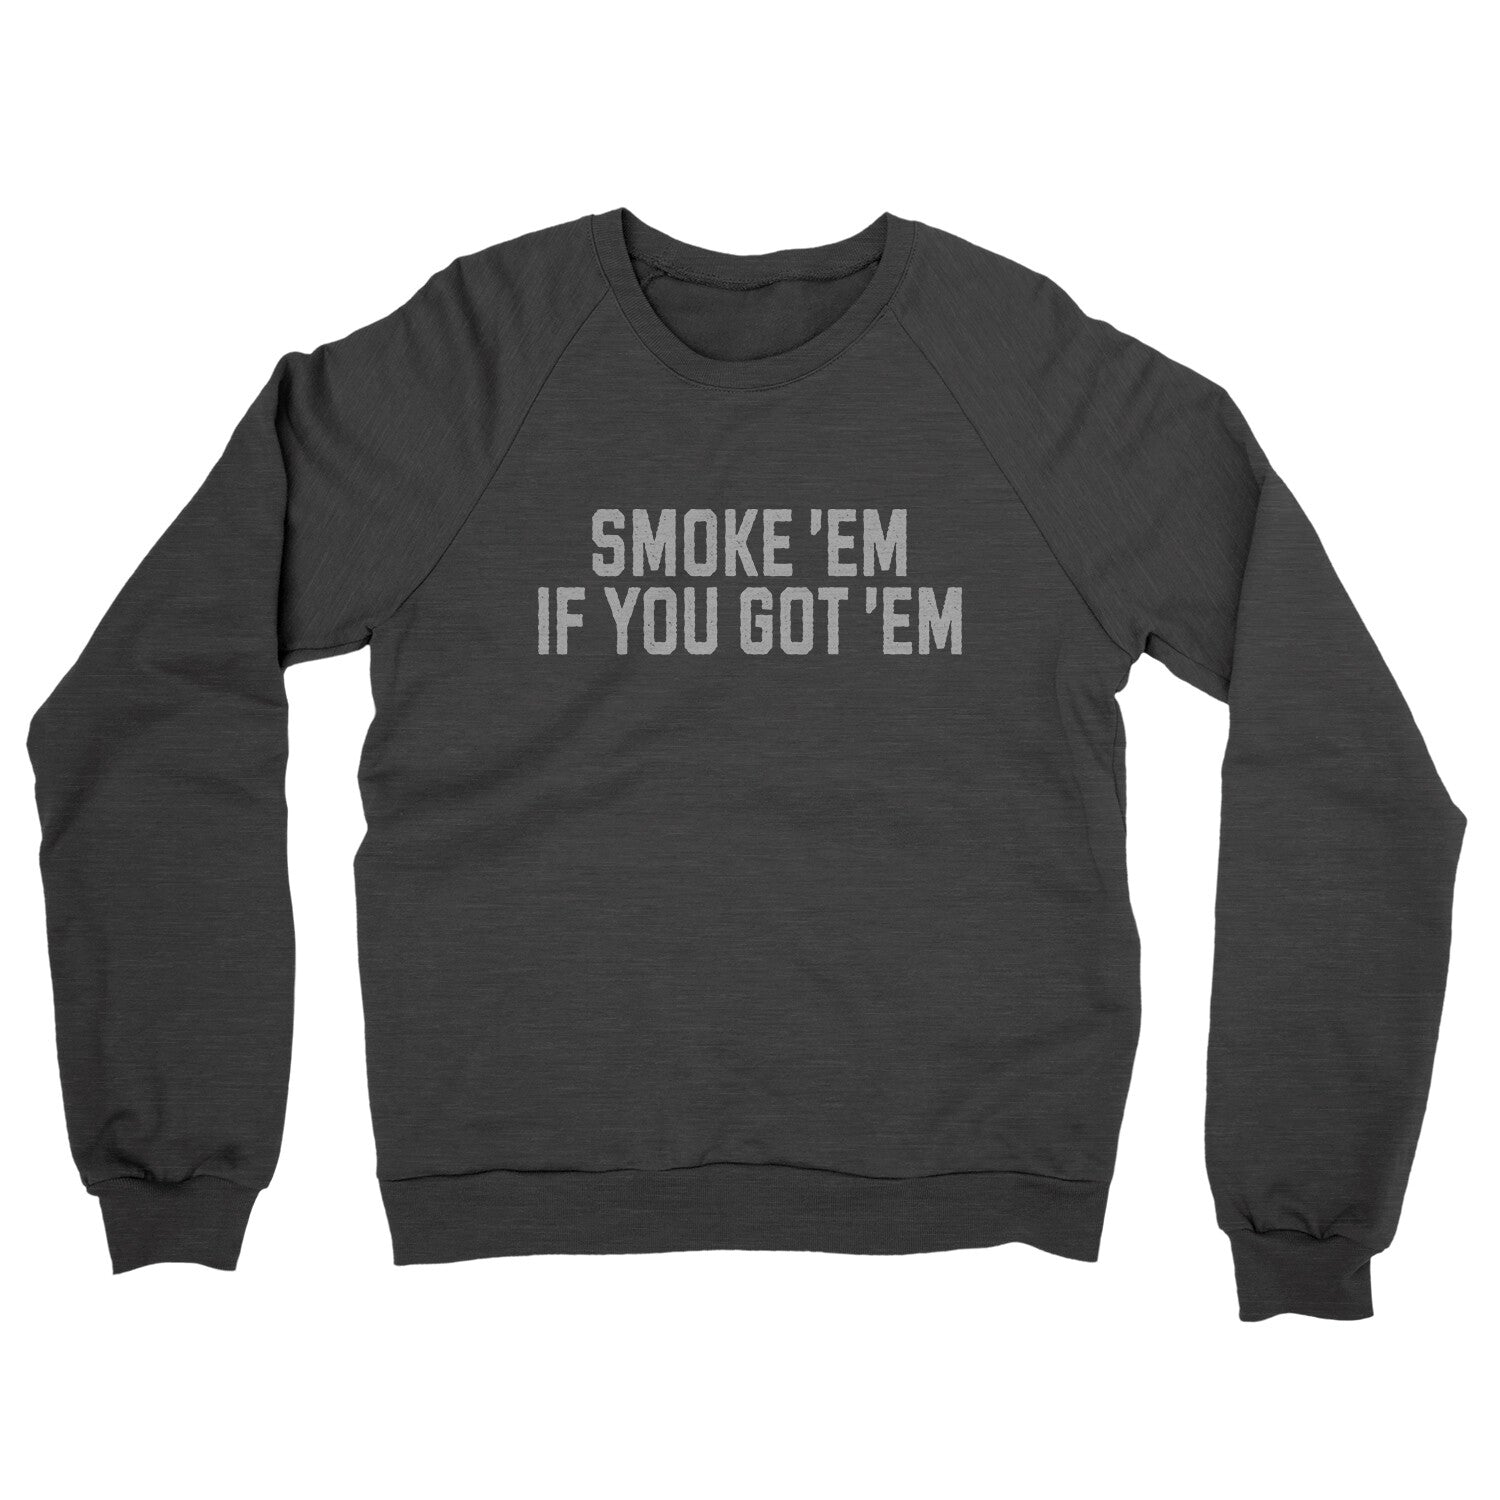 Smoke ‘em If you Got ‘em in Charcoal Heather Color